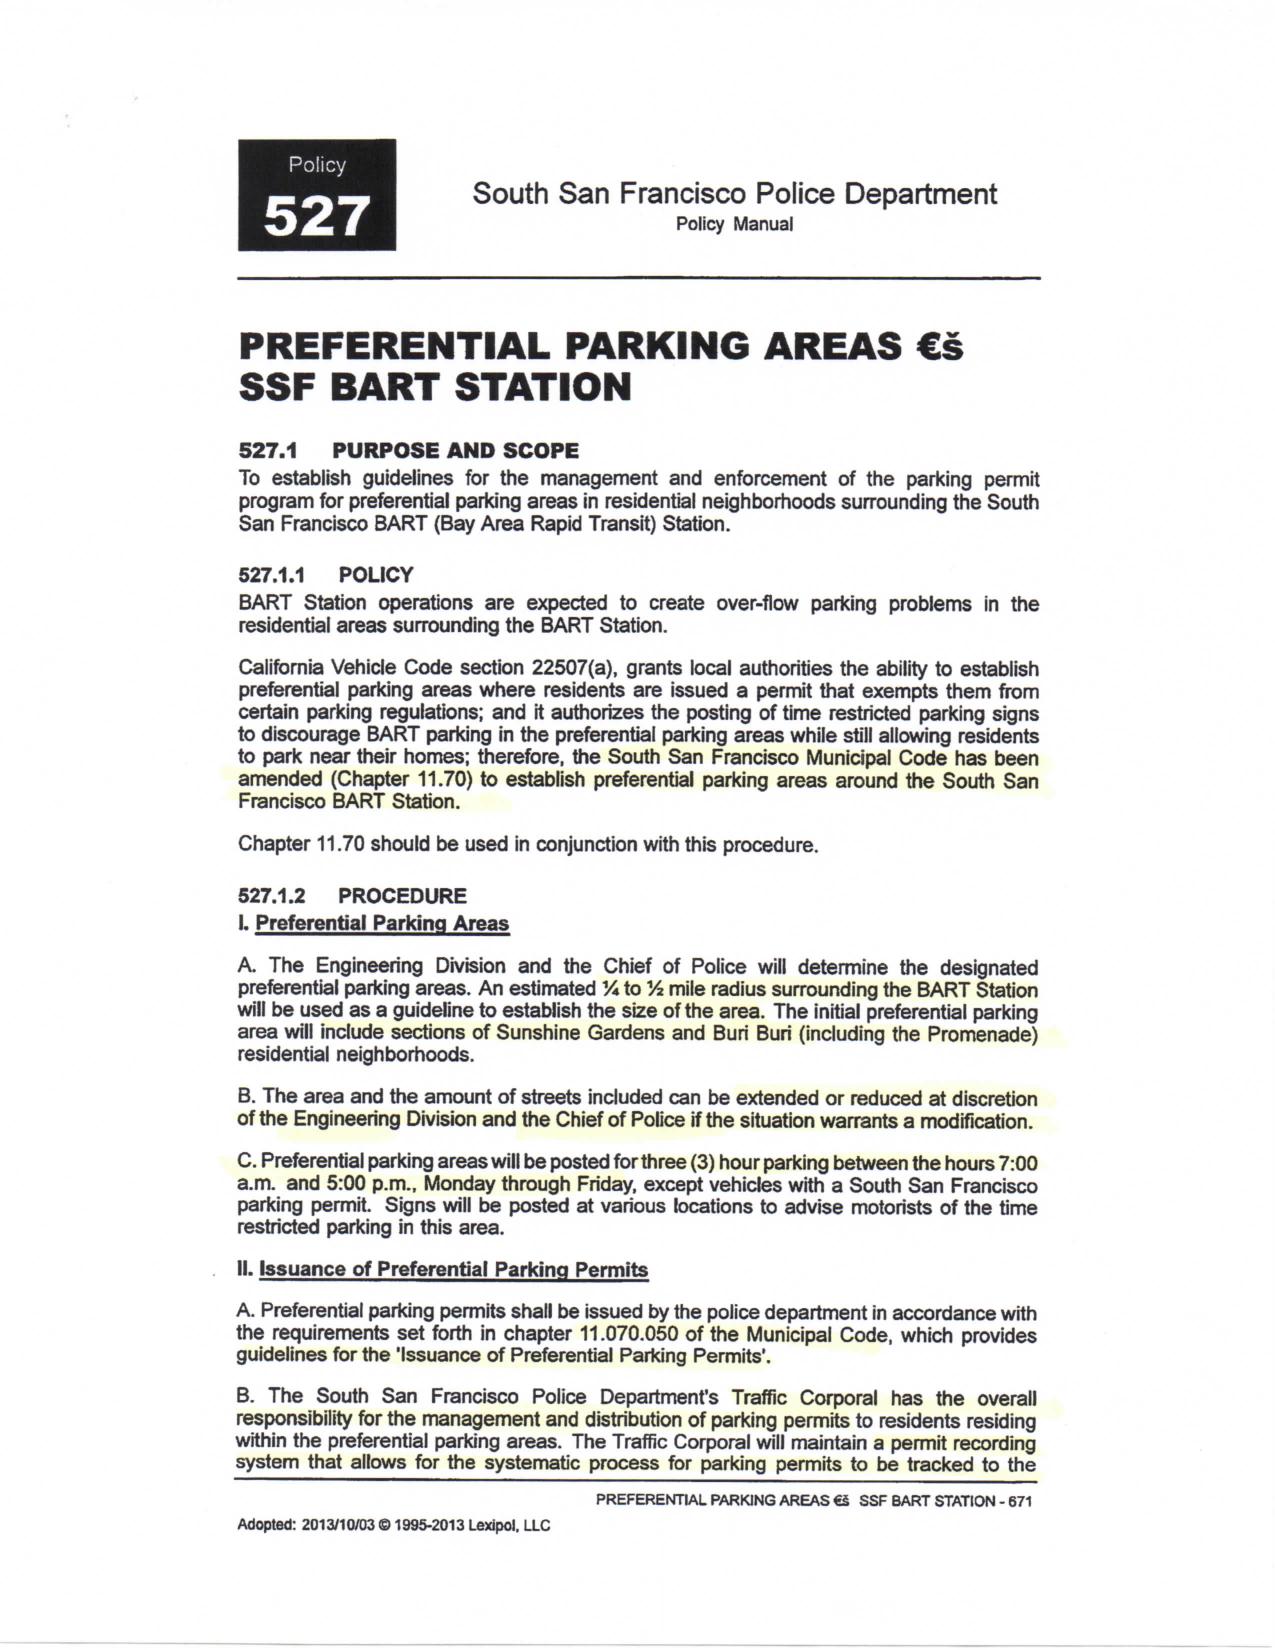 BART Neighborhood Preferred Parking Permit Ordinance Info 2004